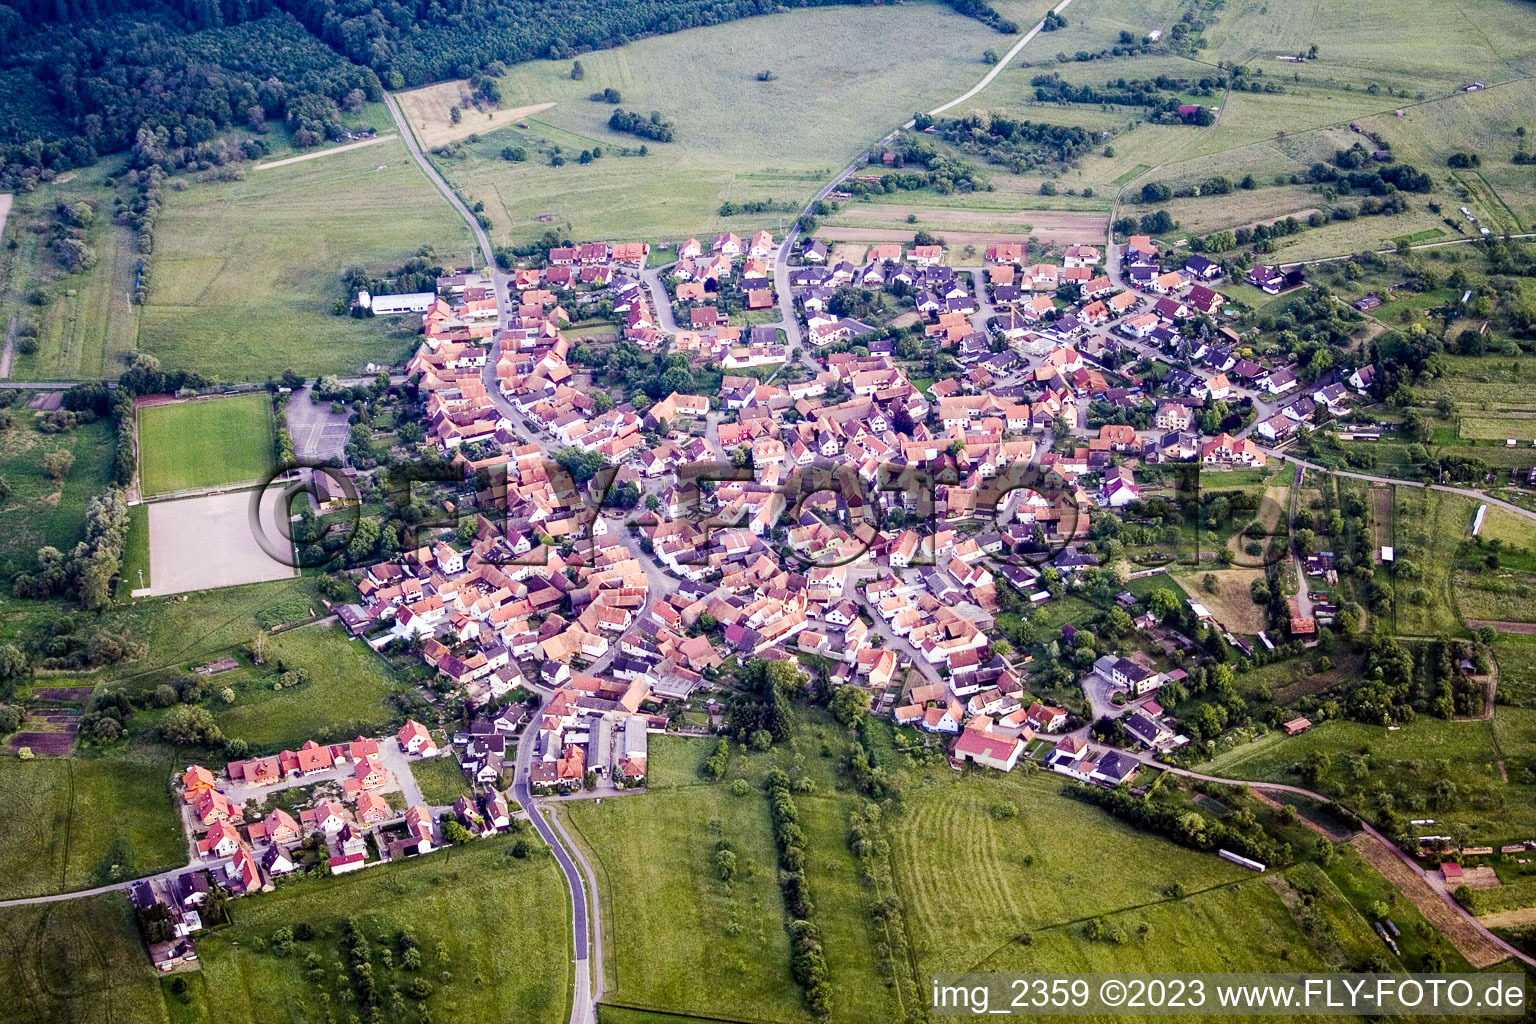 Vue aérienne de Quartier Büchelberg in Wörth am Rhein dans le département Rhénanie-Palatinat, Allemagne